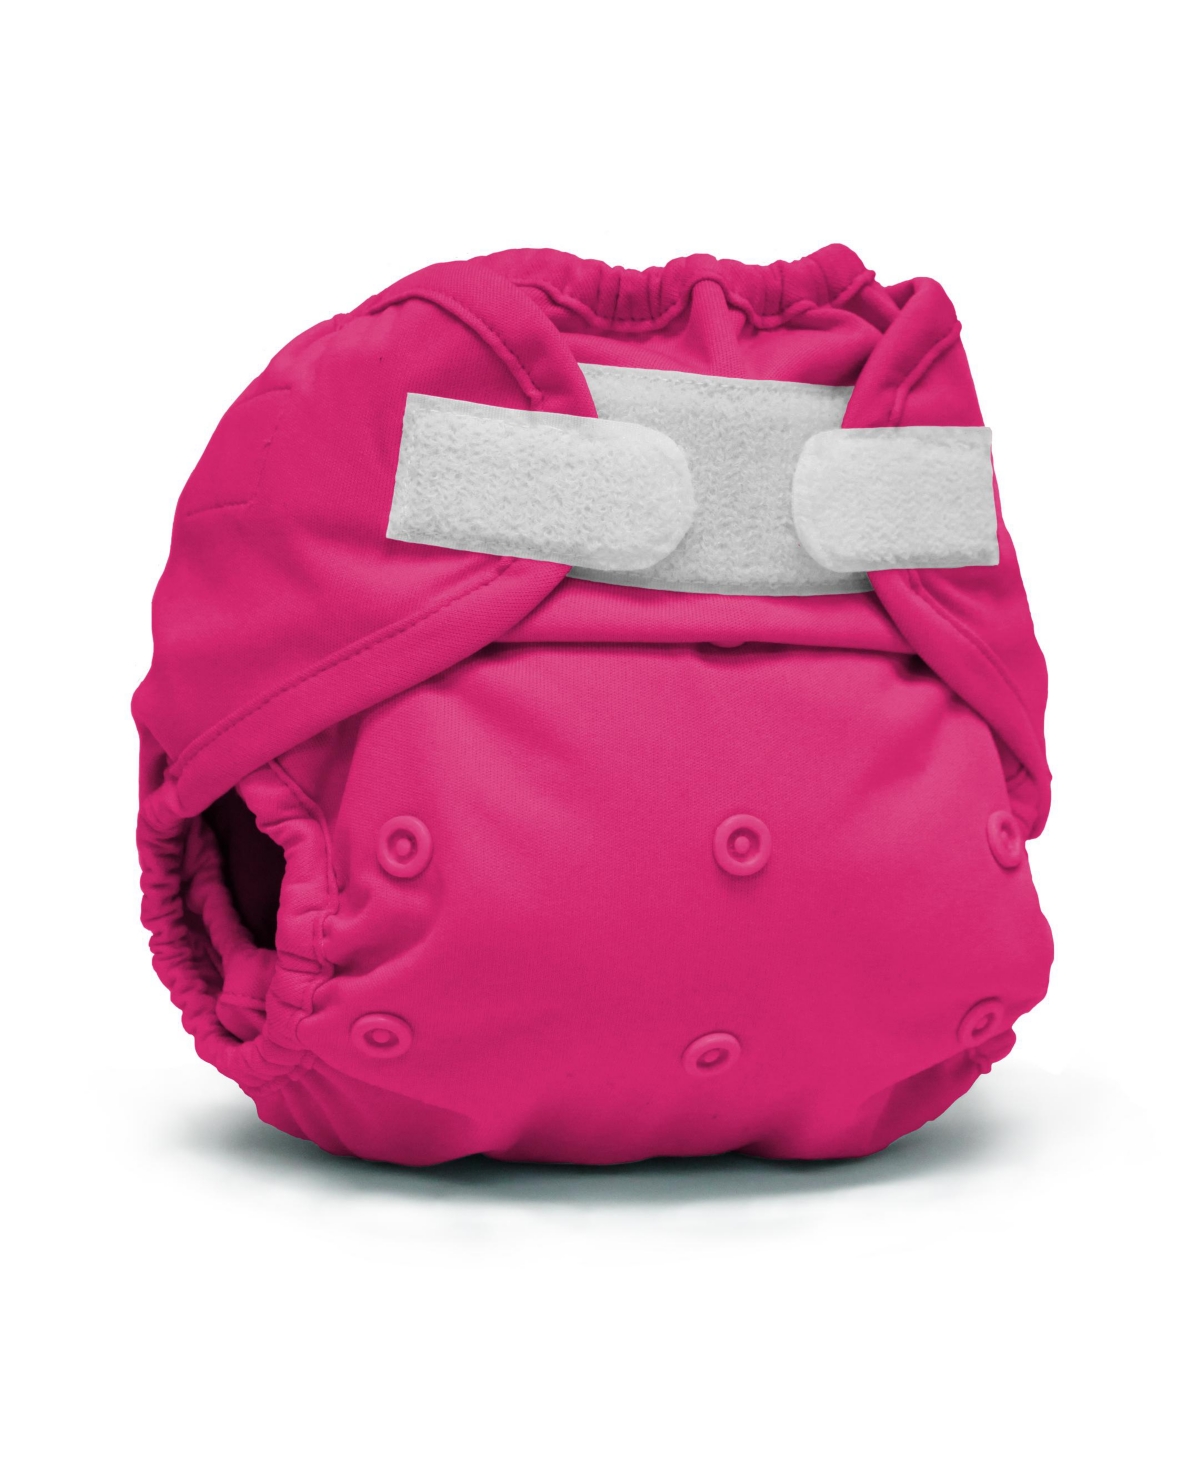 Kanga Care Babies' Rumparooz Reusable One Size Cloth Diaper Cover Aplix In Purple